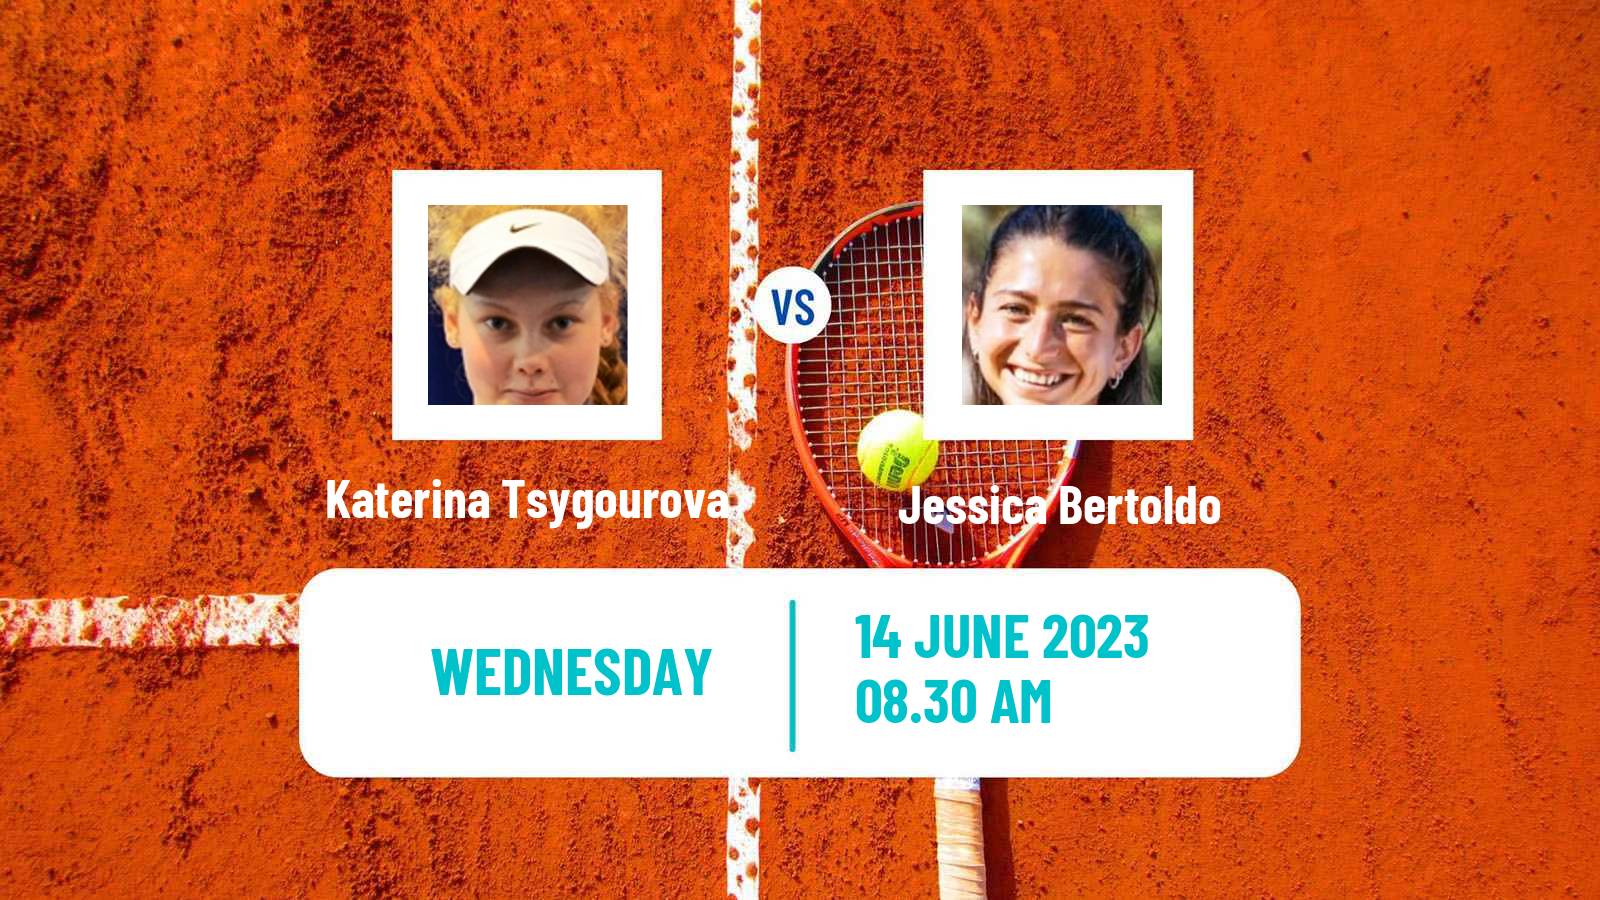 Tennis ITF W15 Kranjska Gora Women Katerina Tsygourova - Jessica Bertoldo